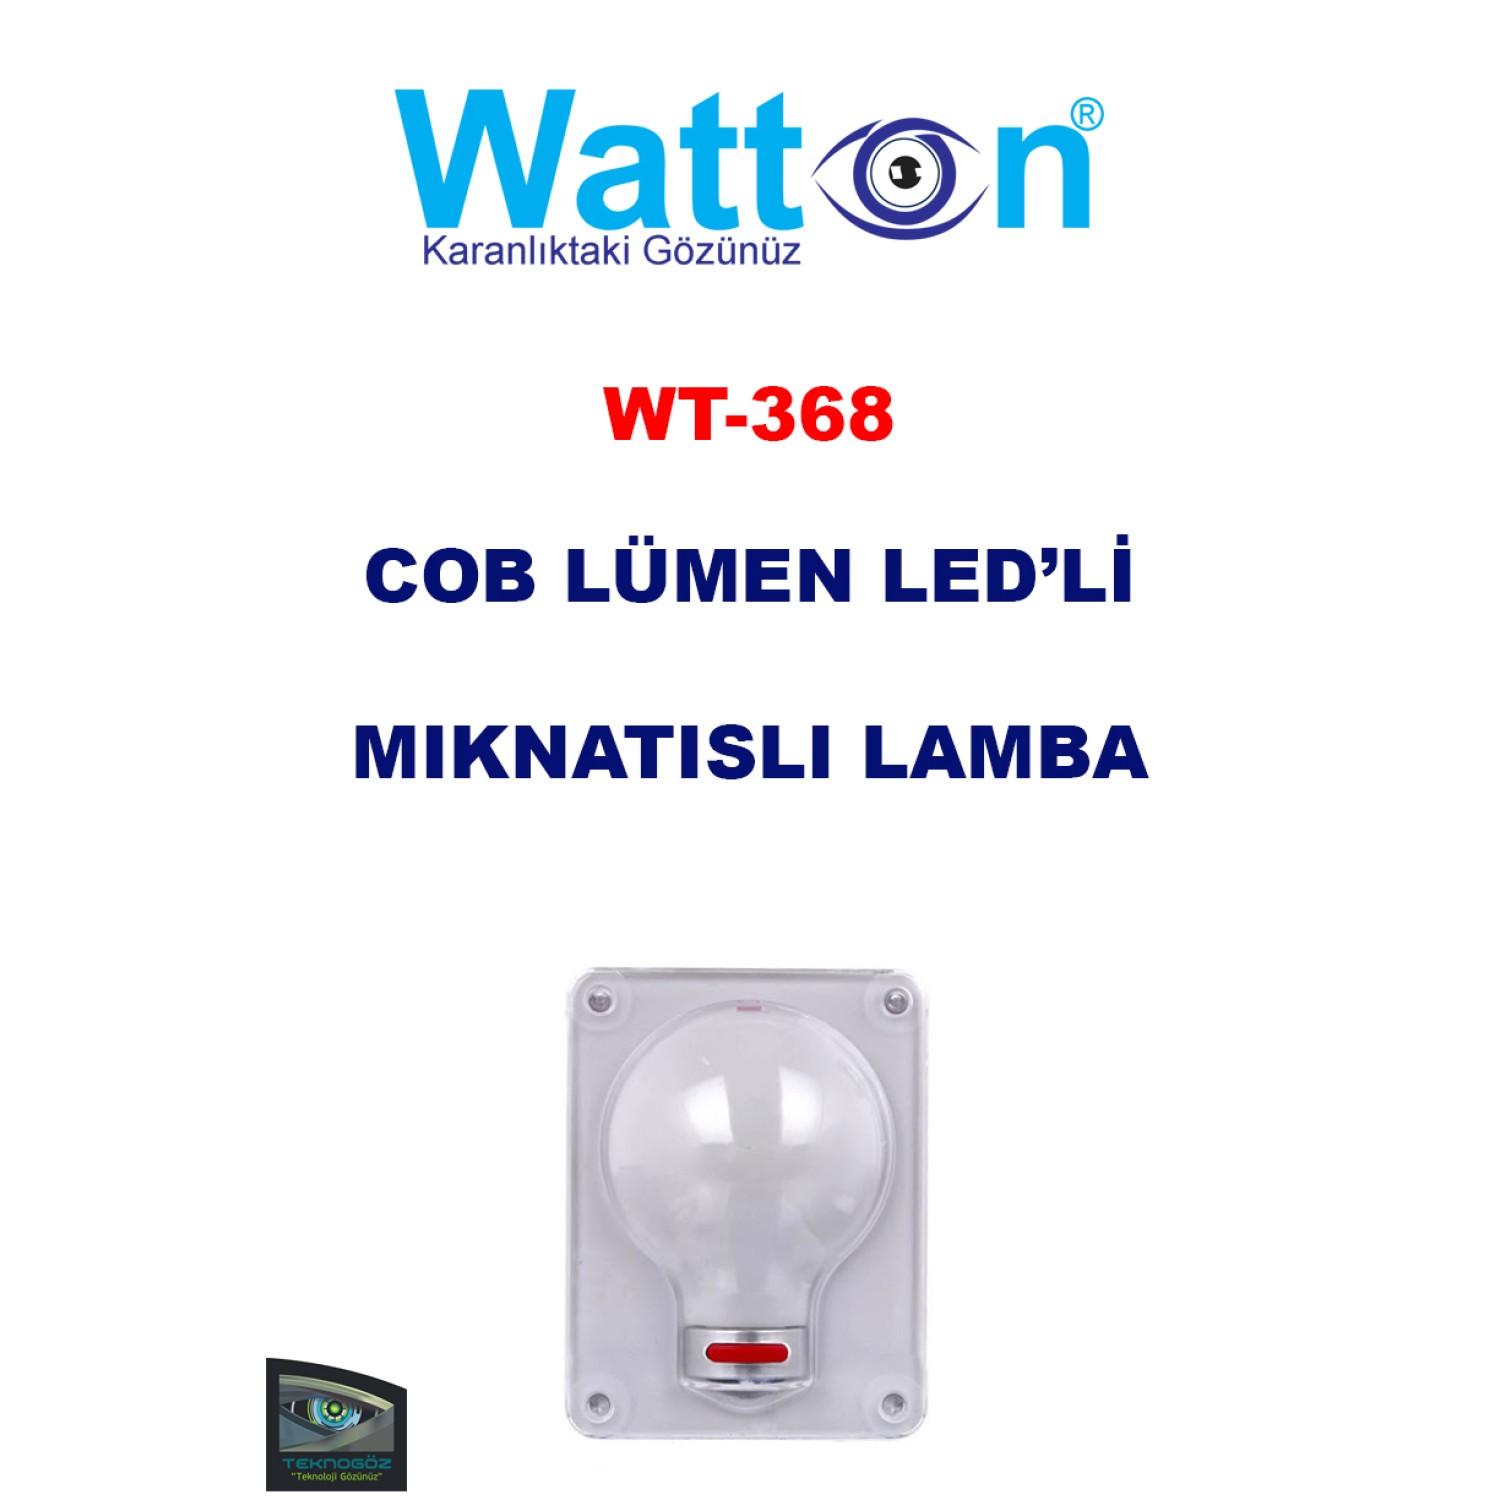 Watton WT-368 COB Lümen Ledli Mıknatıslı Lamba